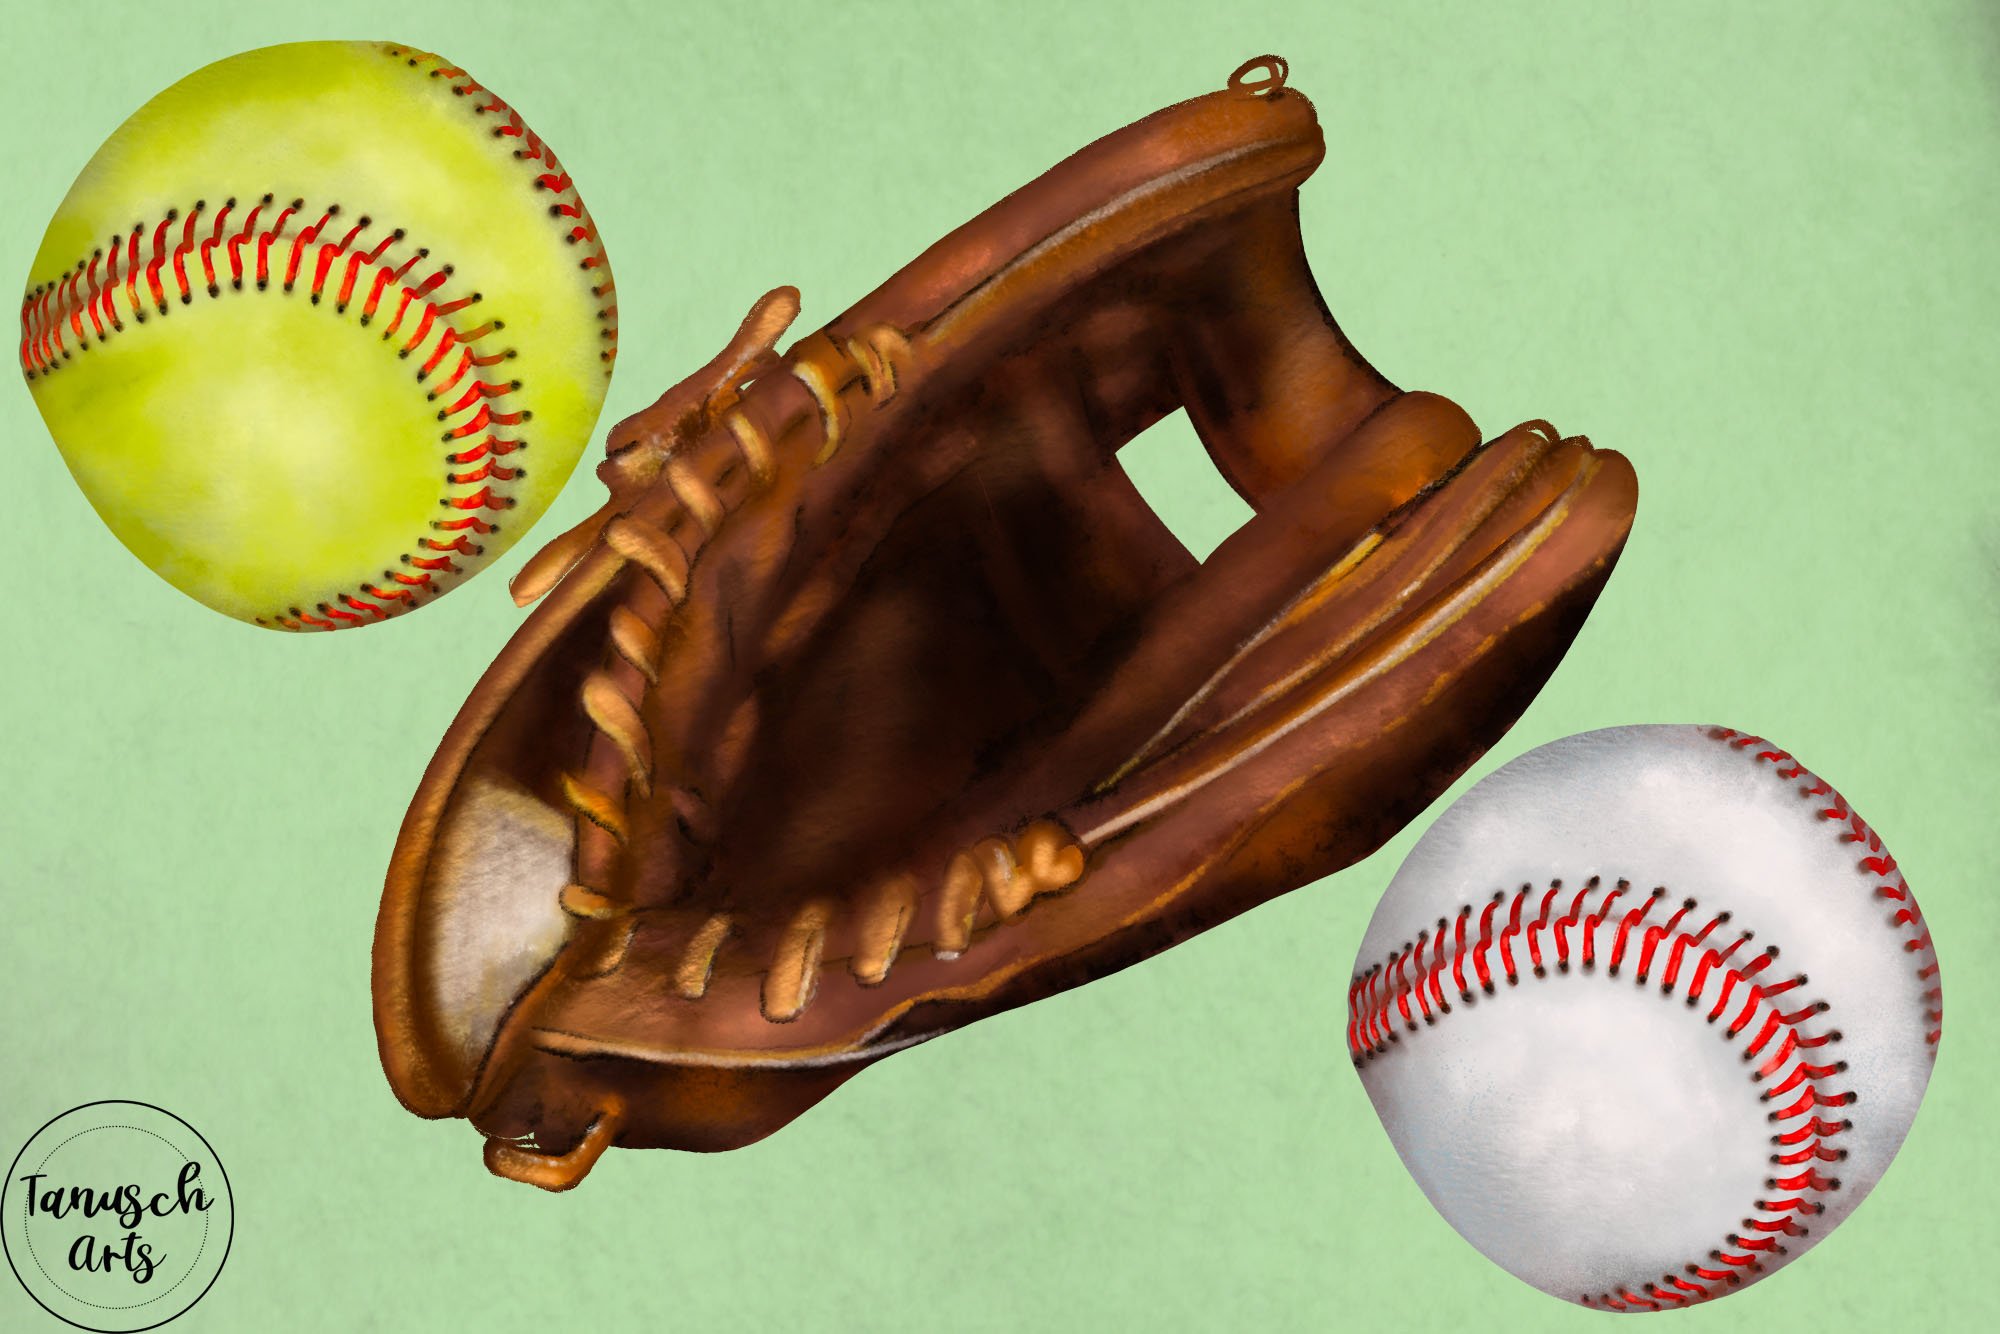 Important baseball elements.